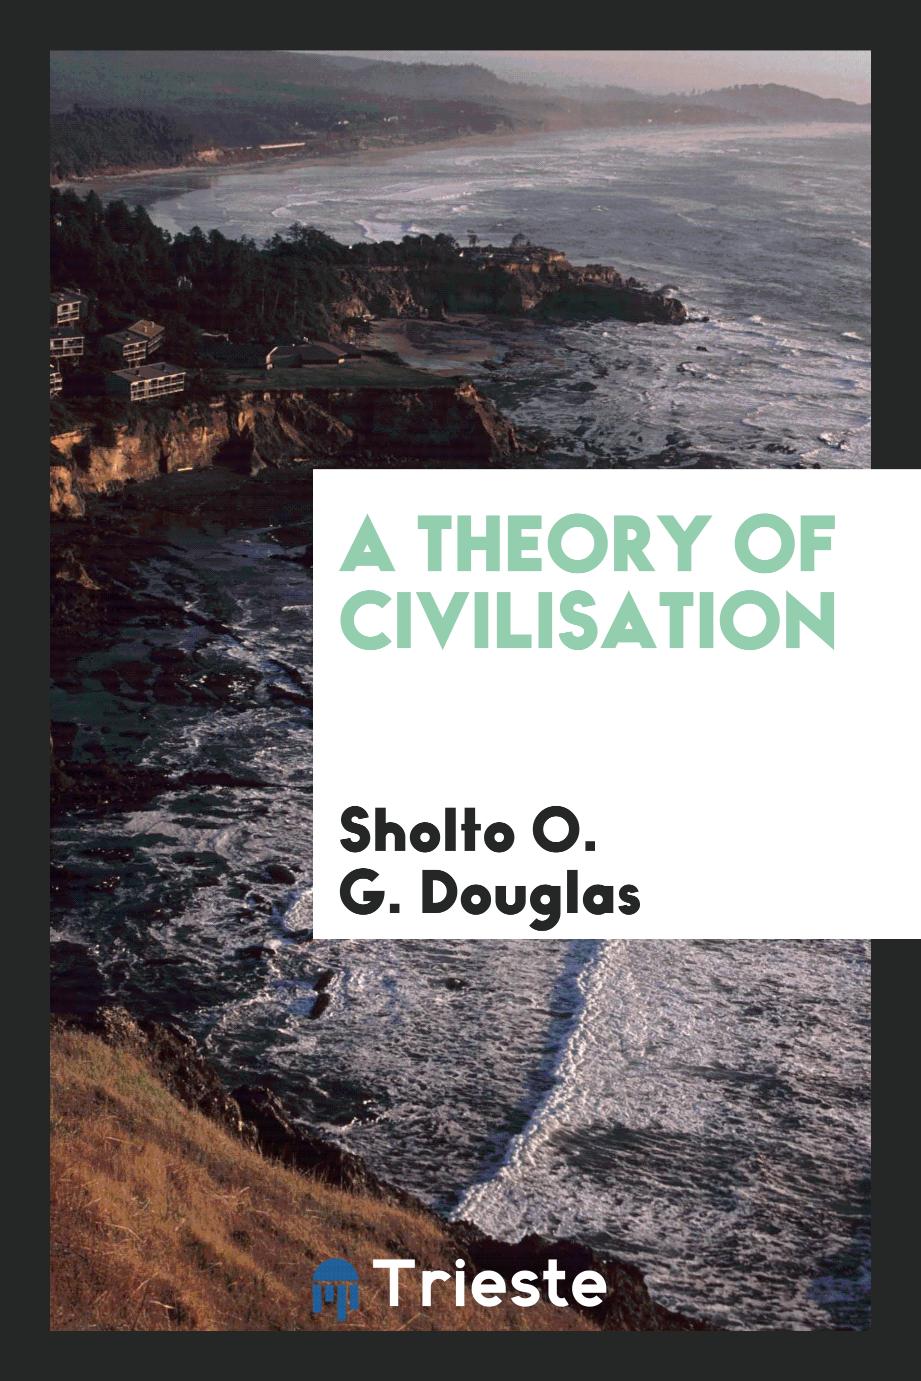 Sholto O. G. Douglas - A theory of civilisation